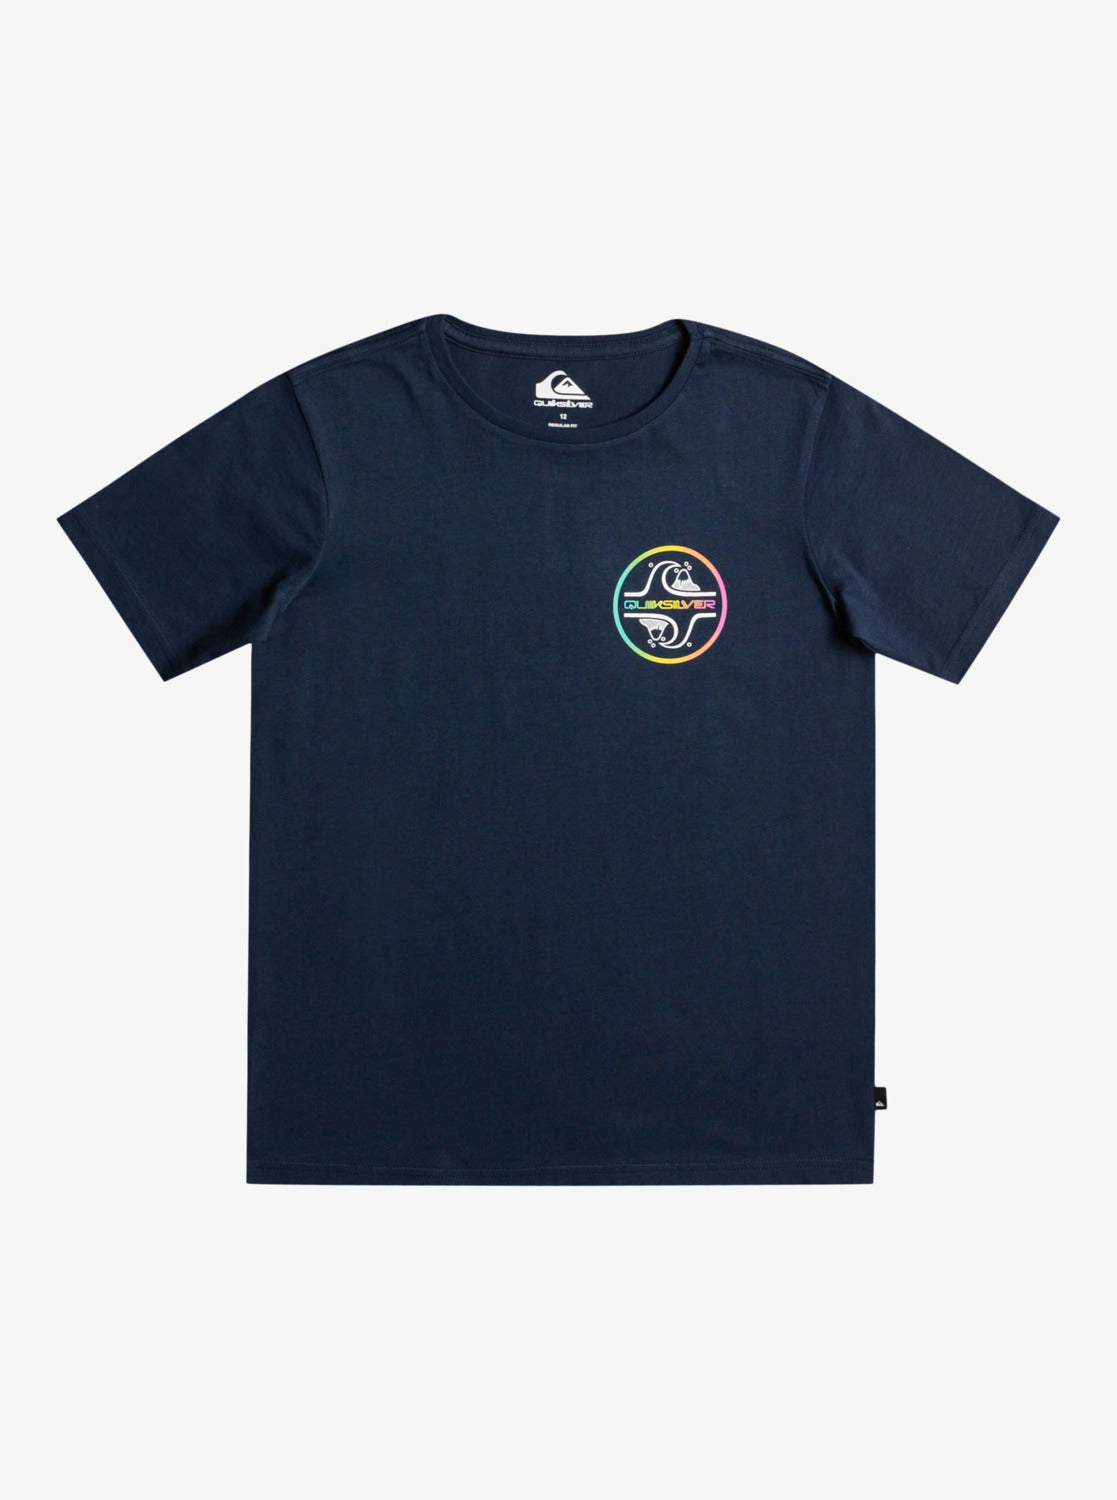 Quiksilver Core Bubble Boys T-Shirt in Navy Blazer